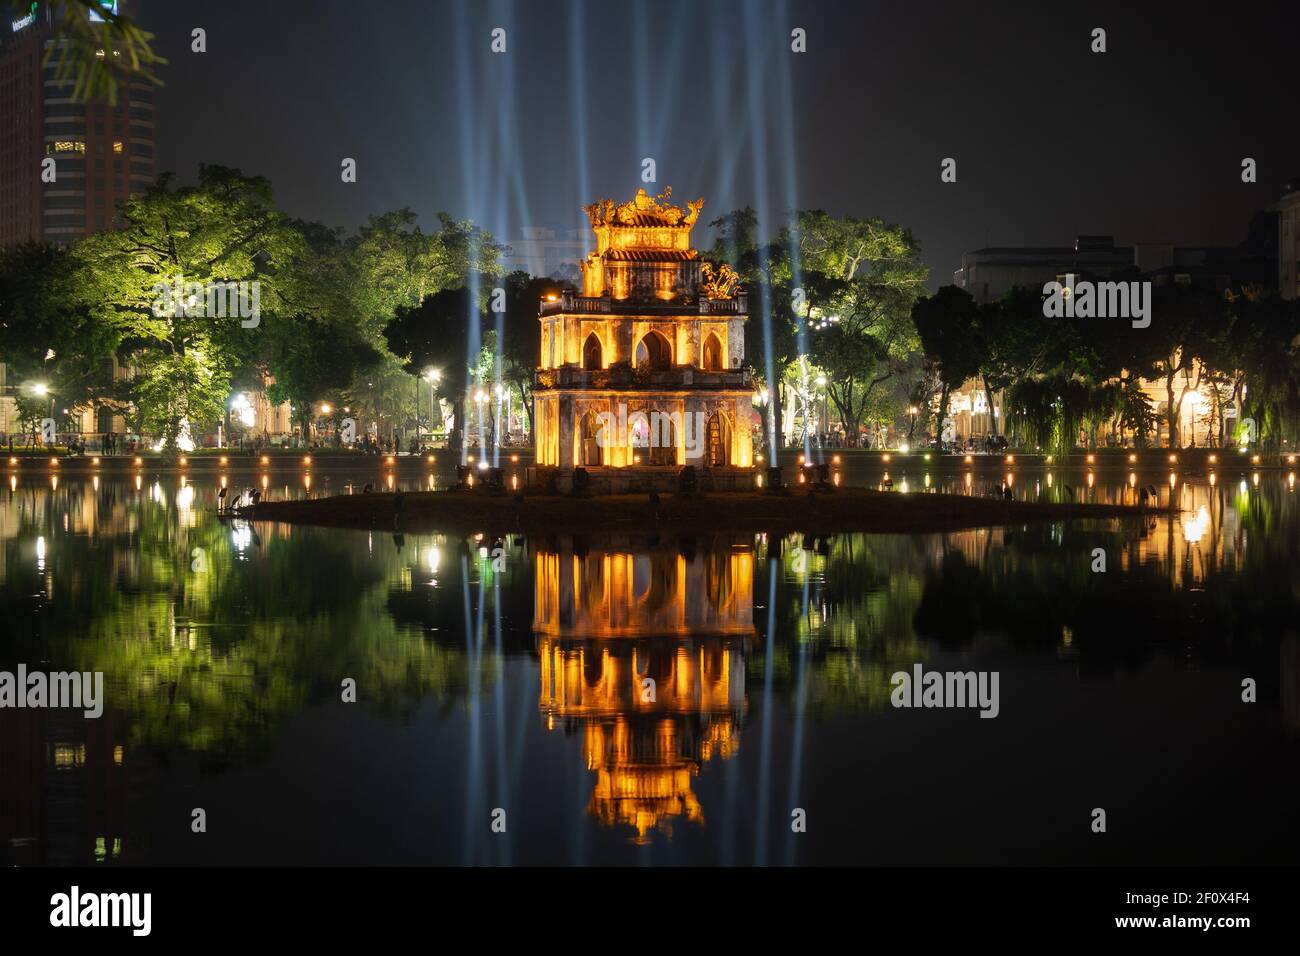 Night view of historical landmark Turtle Tower on Hoan Kiem Lake in central Hanoi, Vietnam. Stock Photo